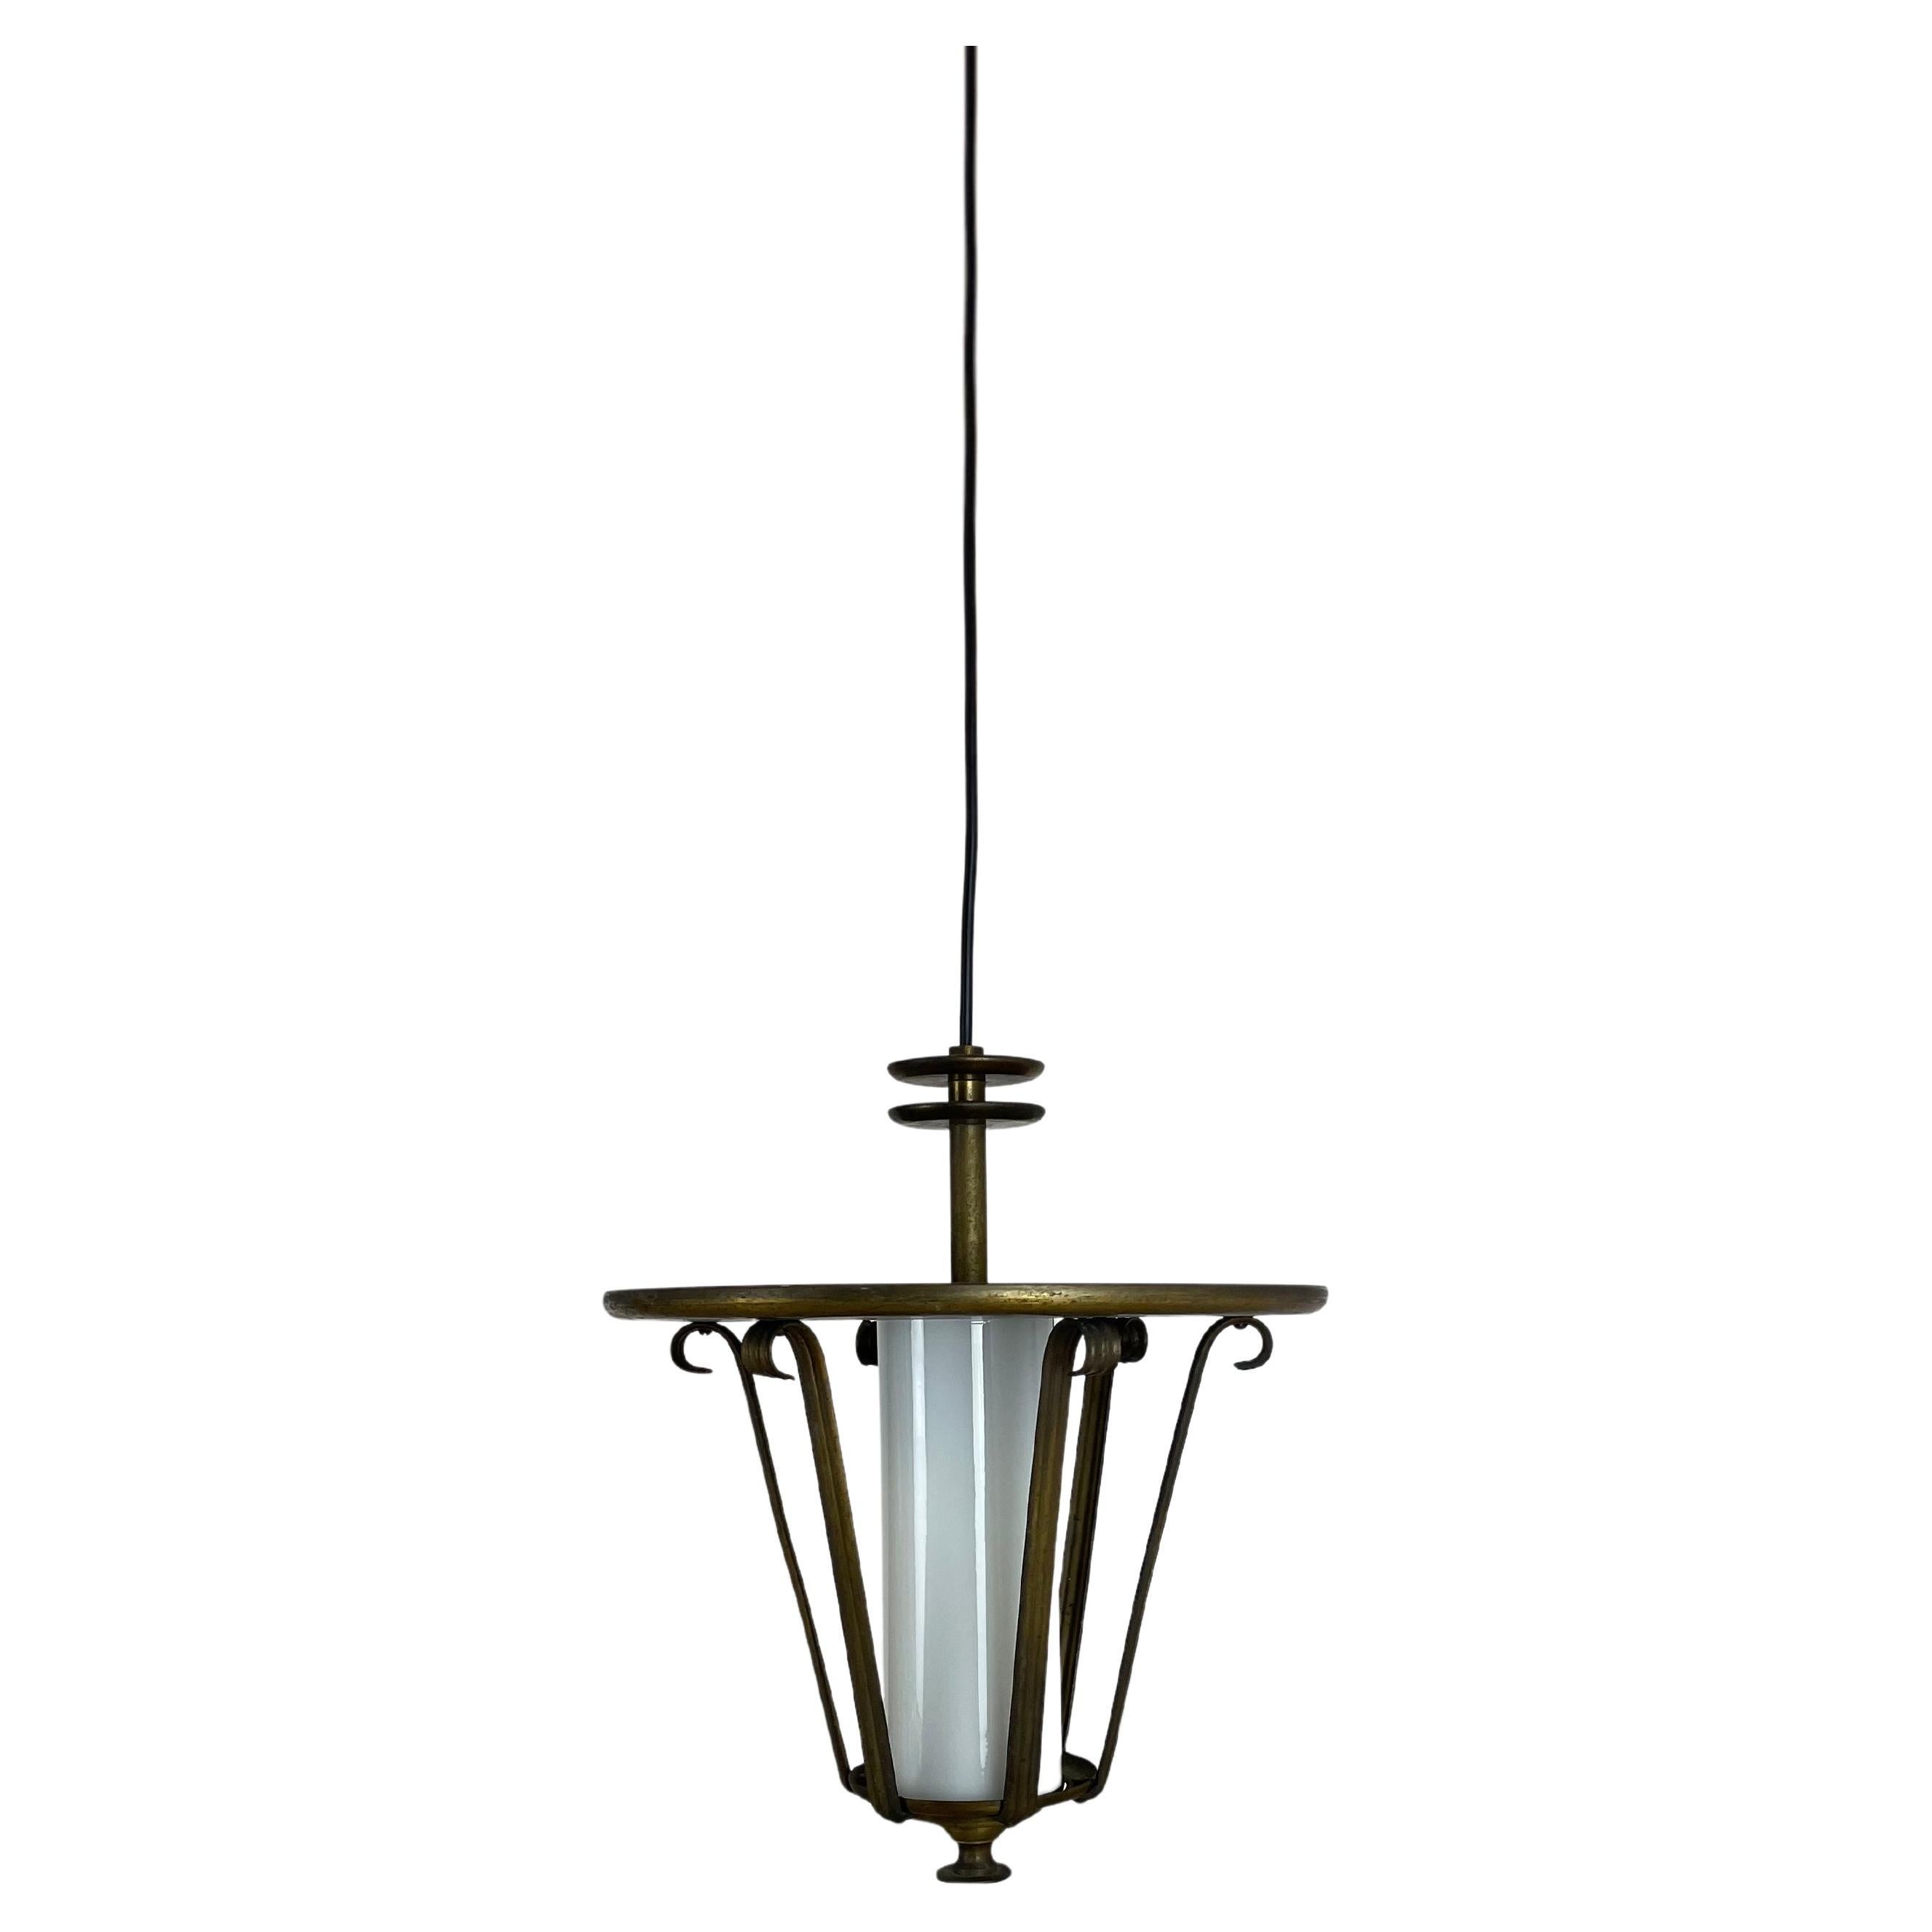 Midcentury Stilnovo Style Brass and Glass Tube Hanging Lantern Light, Italy 1950